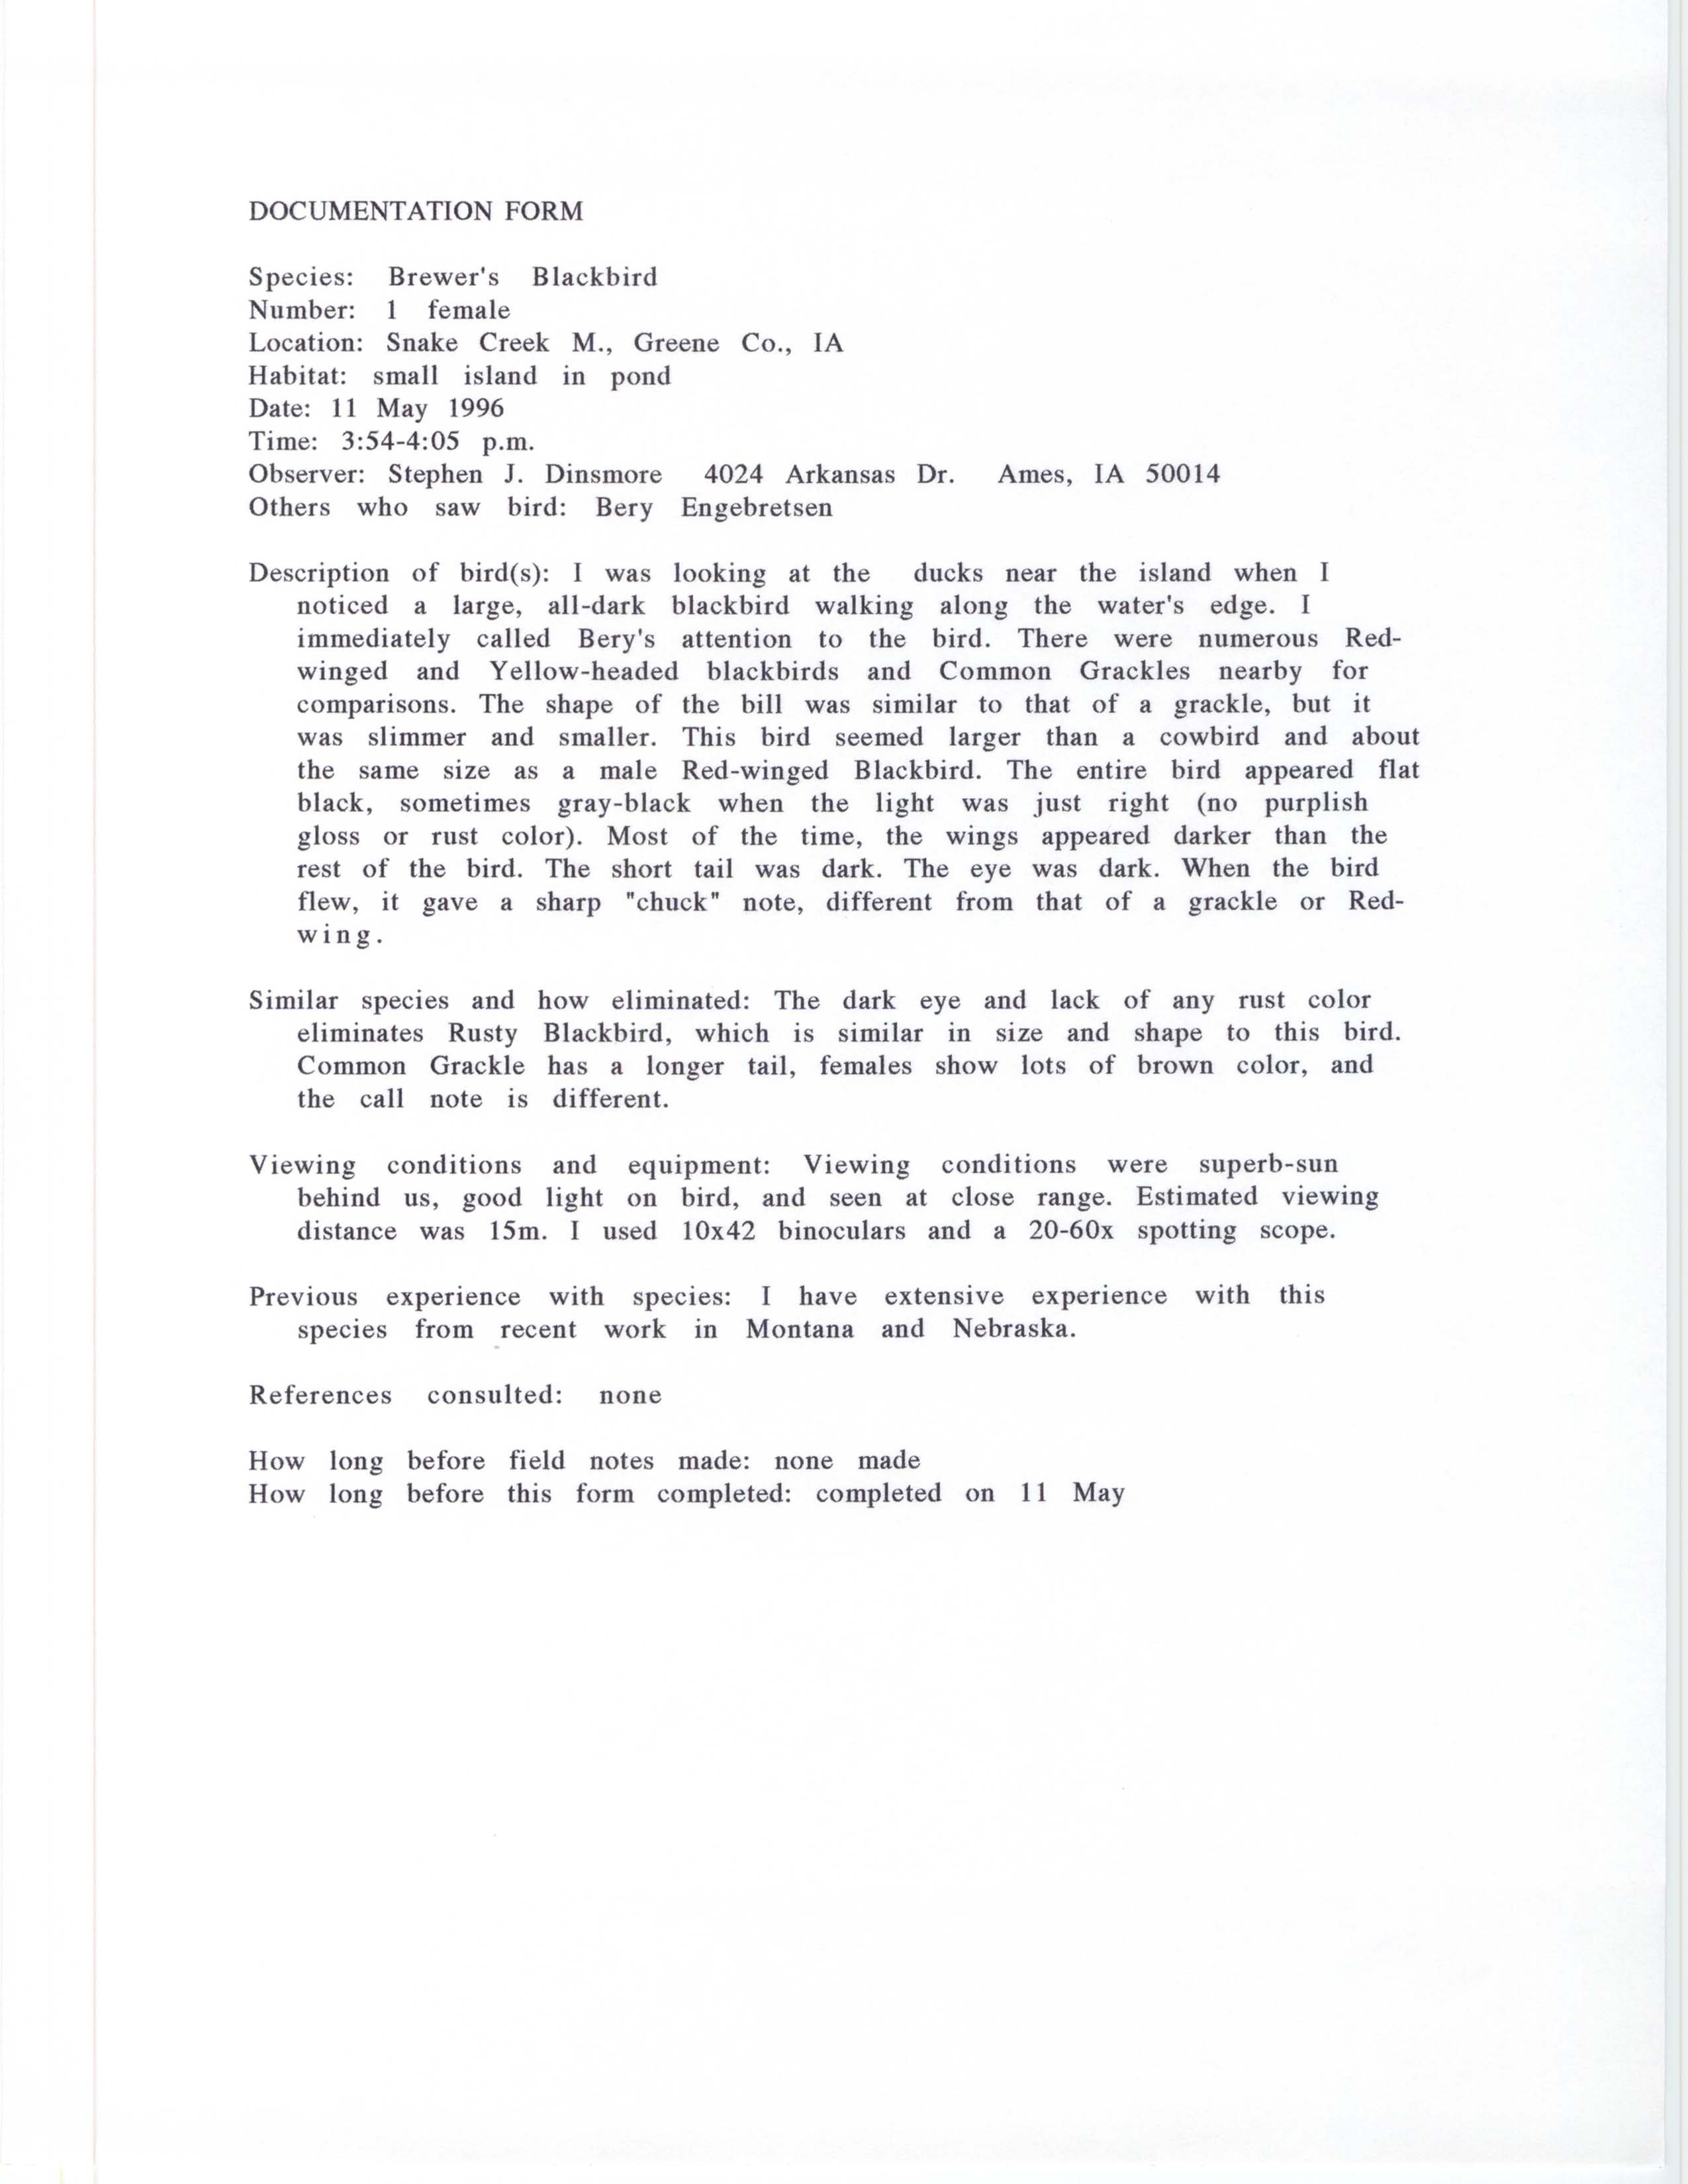 Rare bird documentation form for Brewer's Blackbird at Snake Creek Marsh, 1996